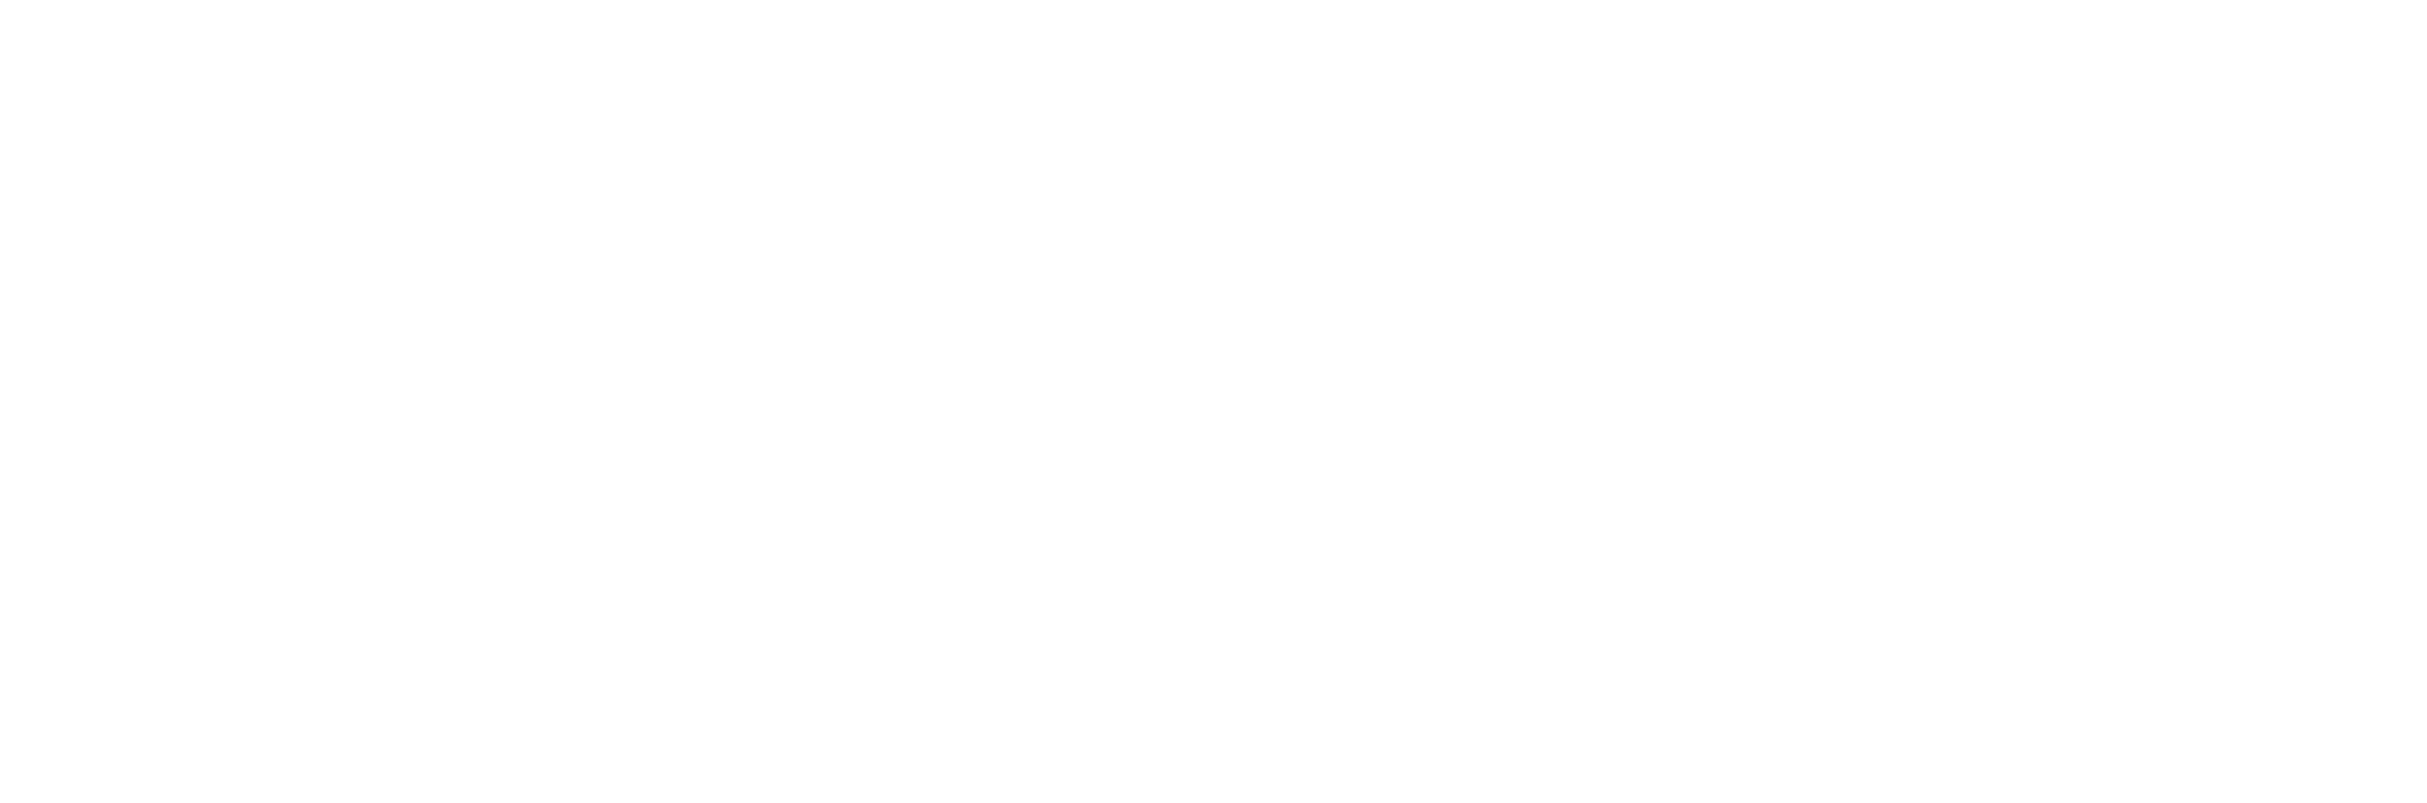 Haase-Schimanski-Grau-Logo White